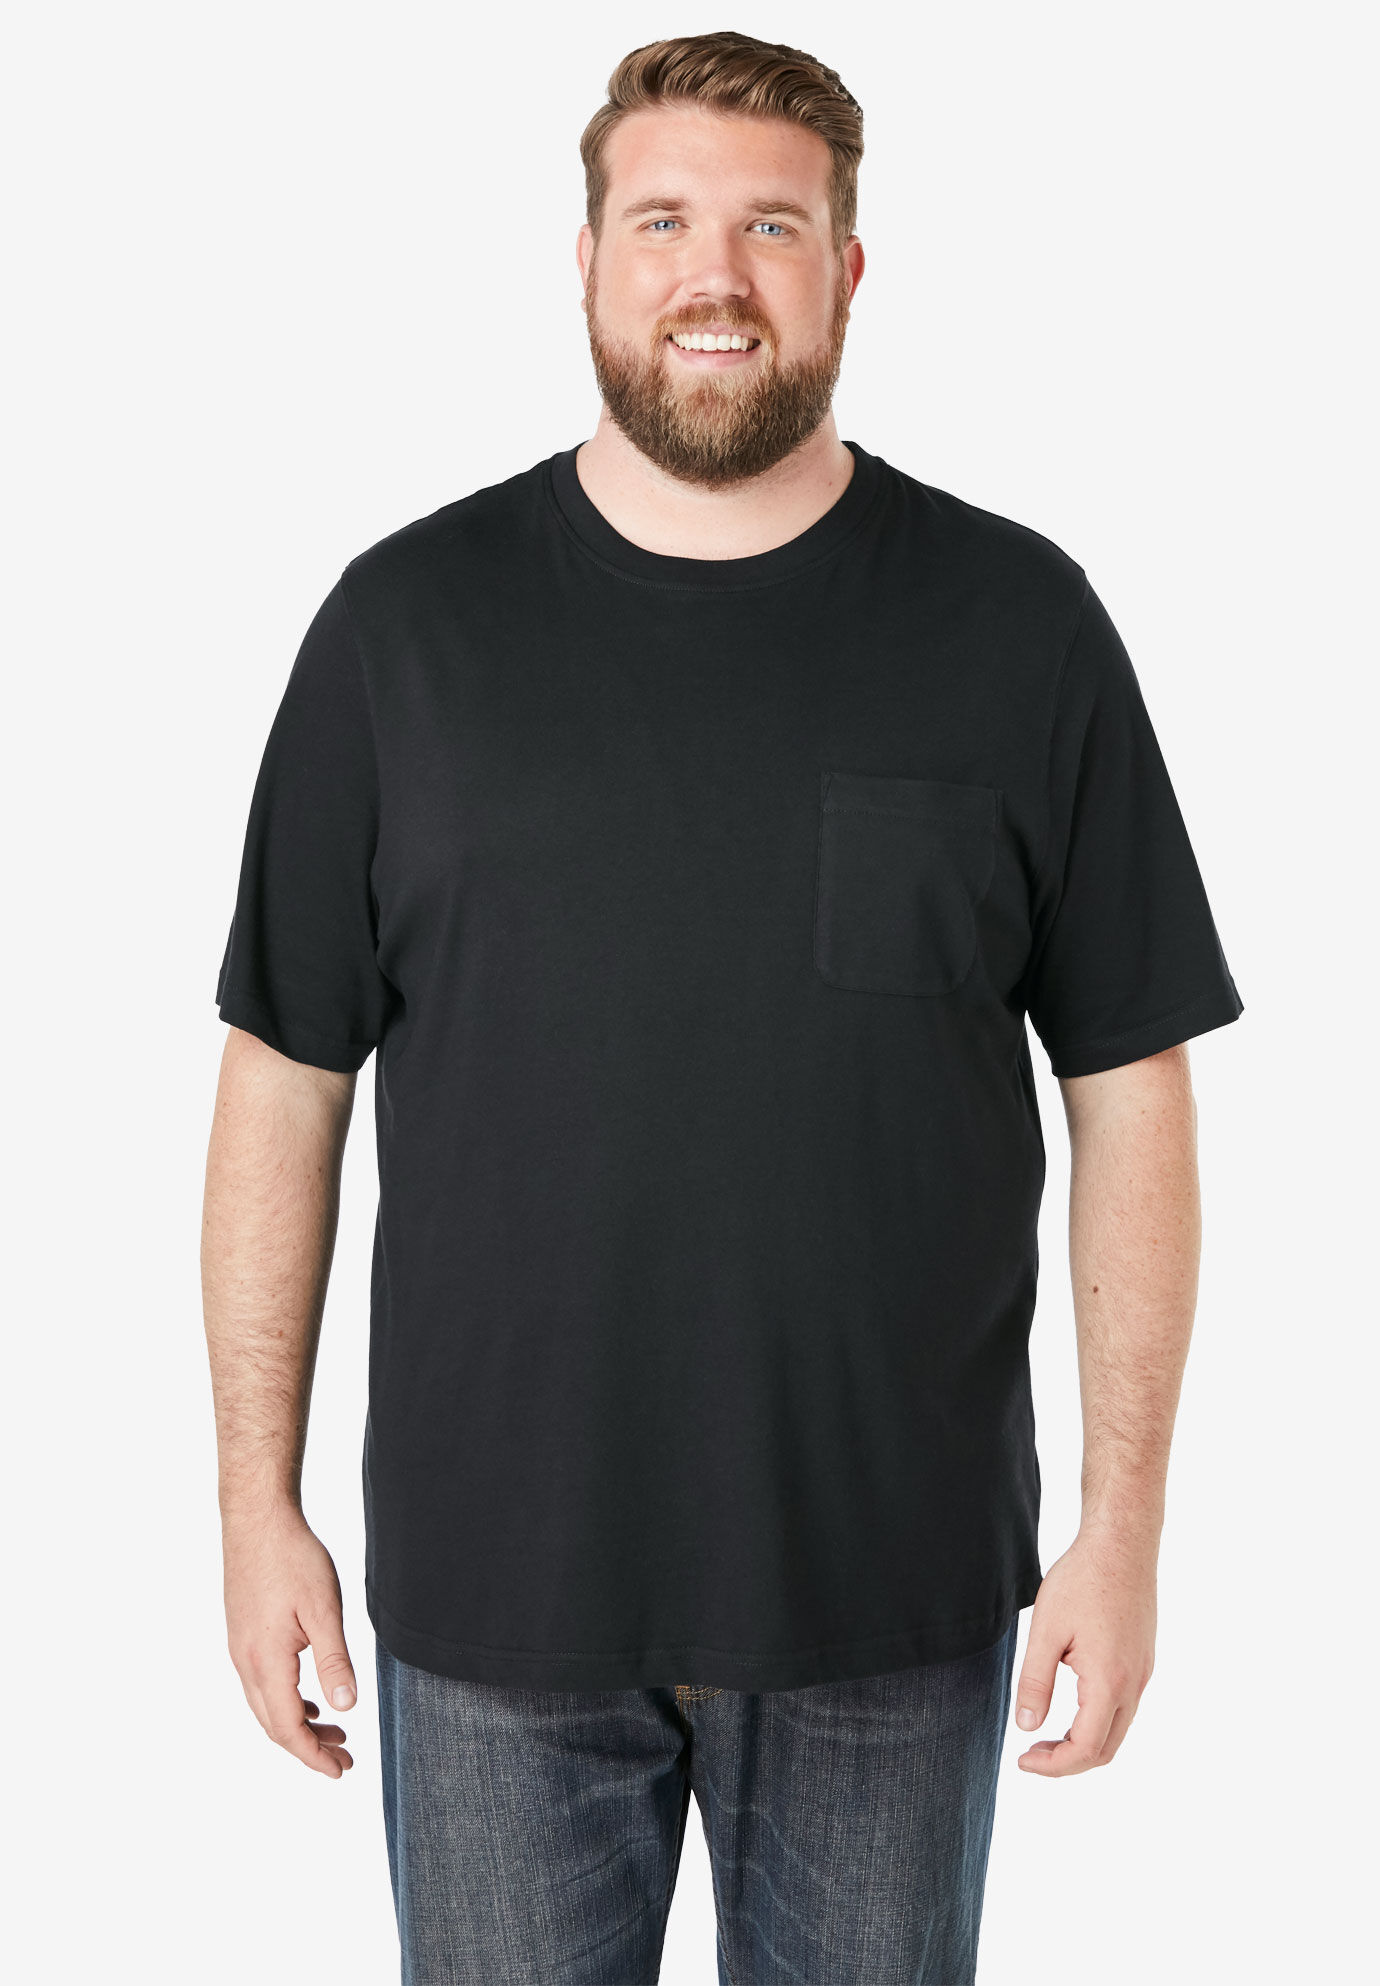 mens extra large tall shirts